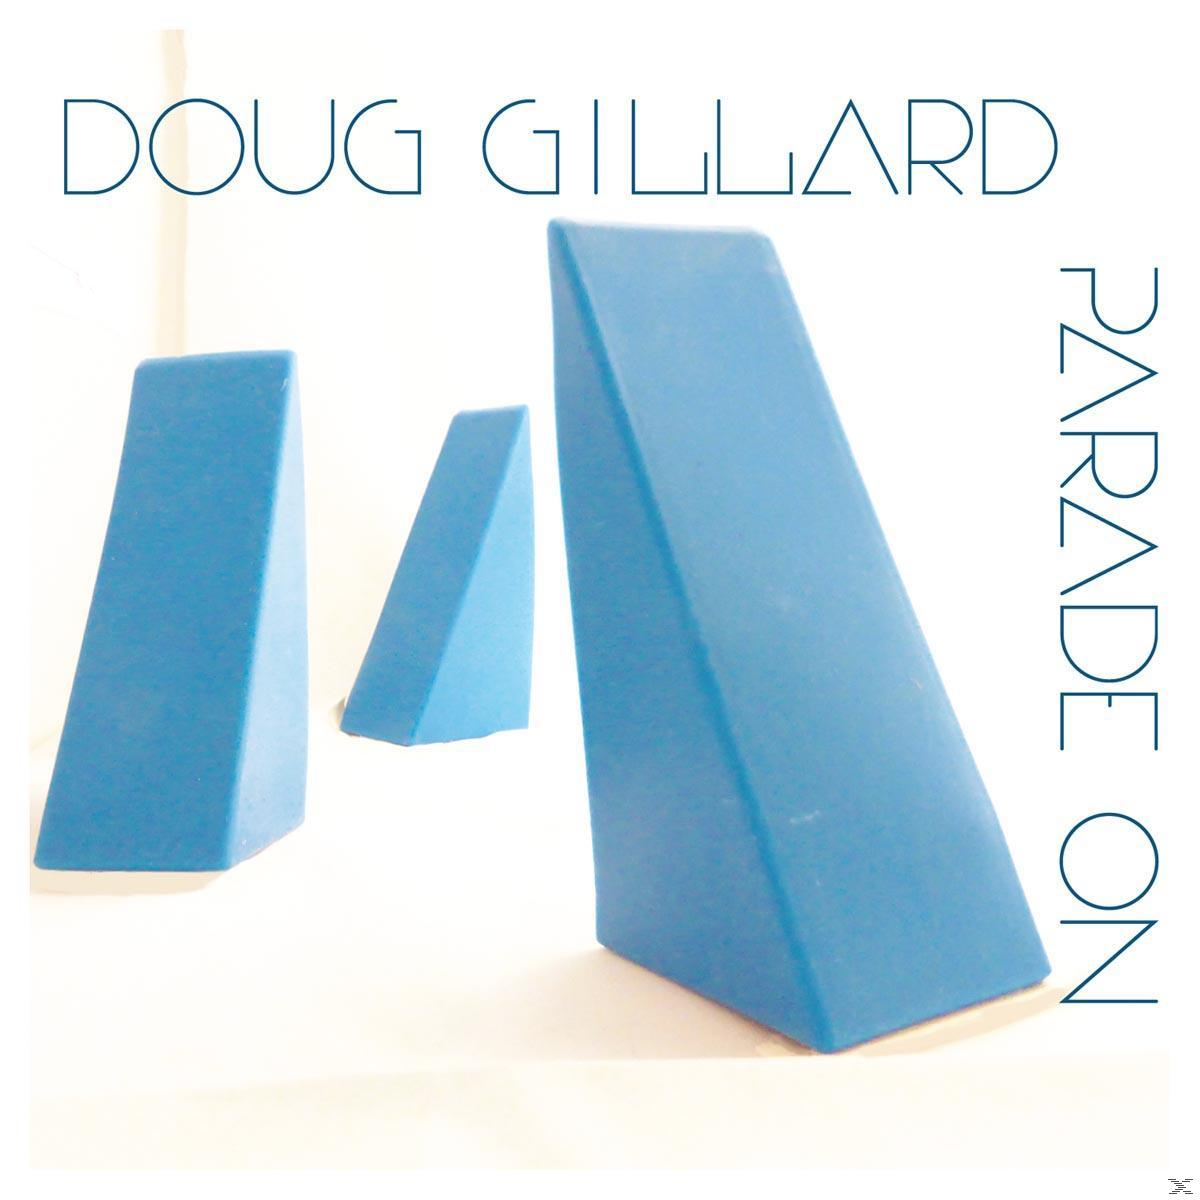 (CD) Gillard Doug - Parade - On